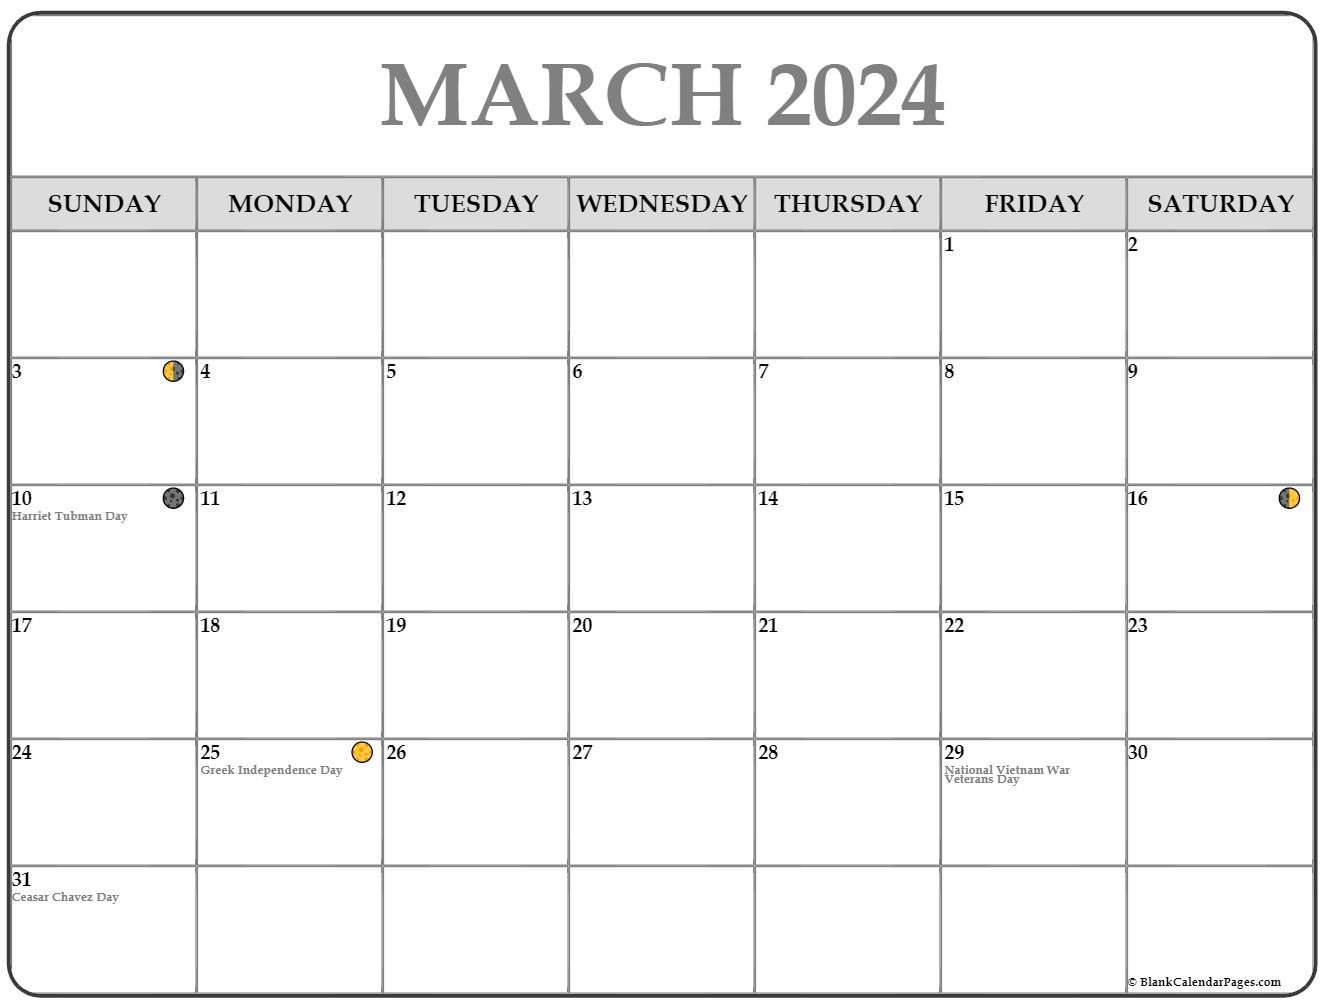 March 2024 Lunar Calendar Printable Allis Bendite - Free Printable 2024 Calendar With Moon Phases Cosmic Events